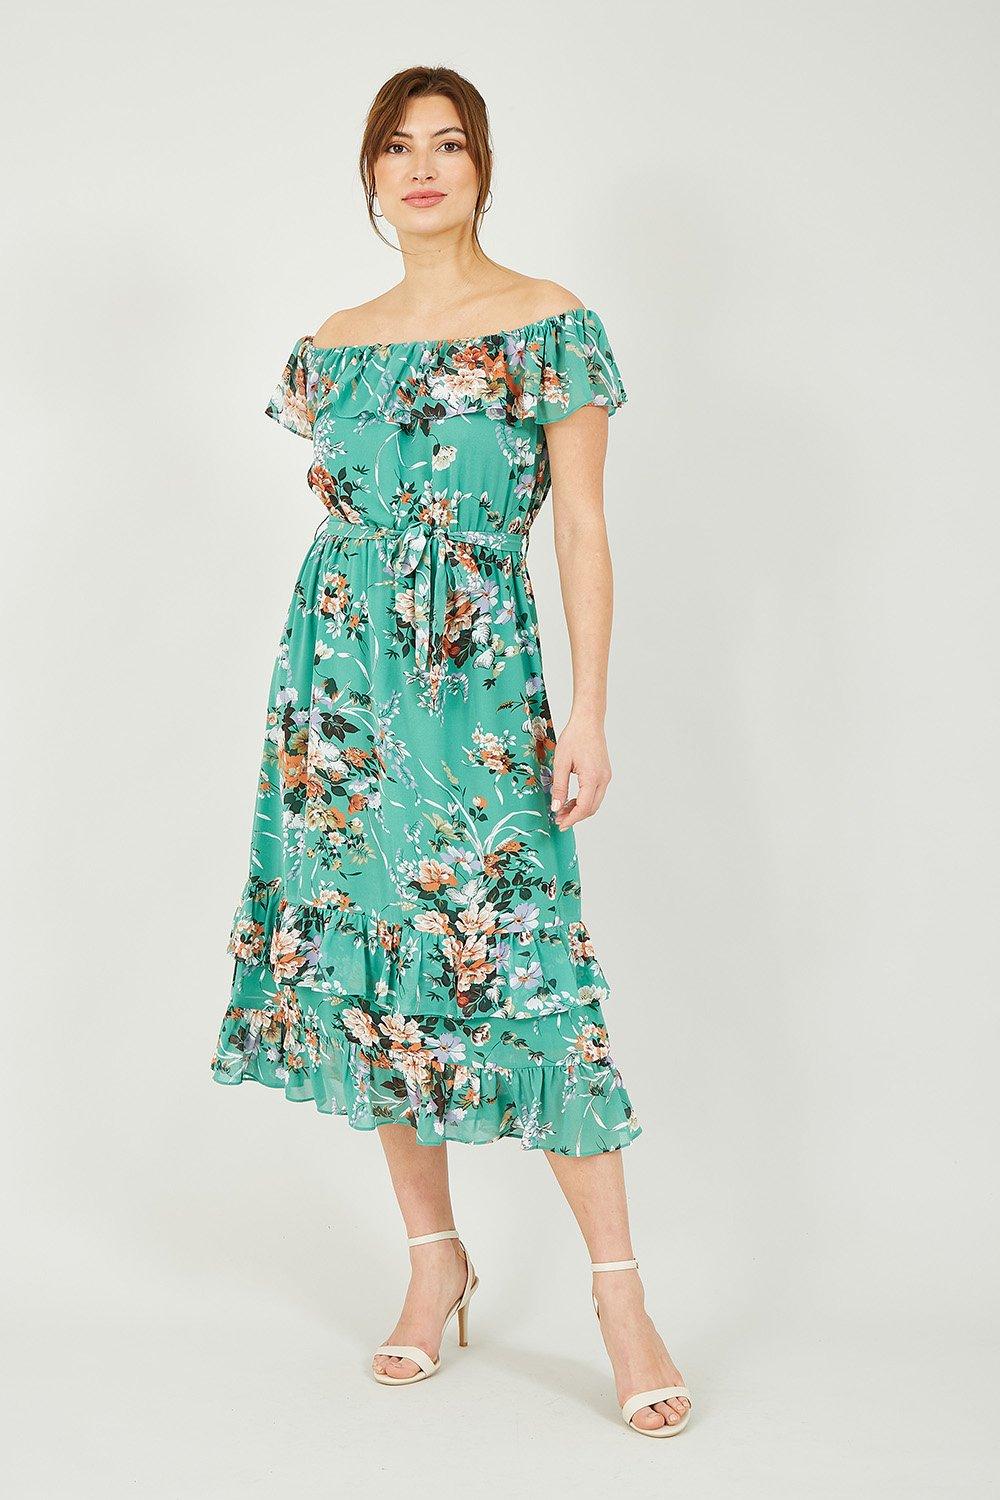 Mint Floral Bardot Dress